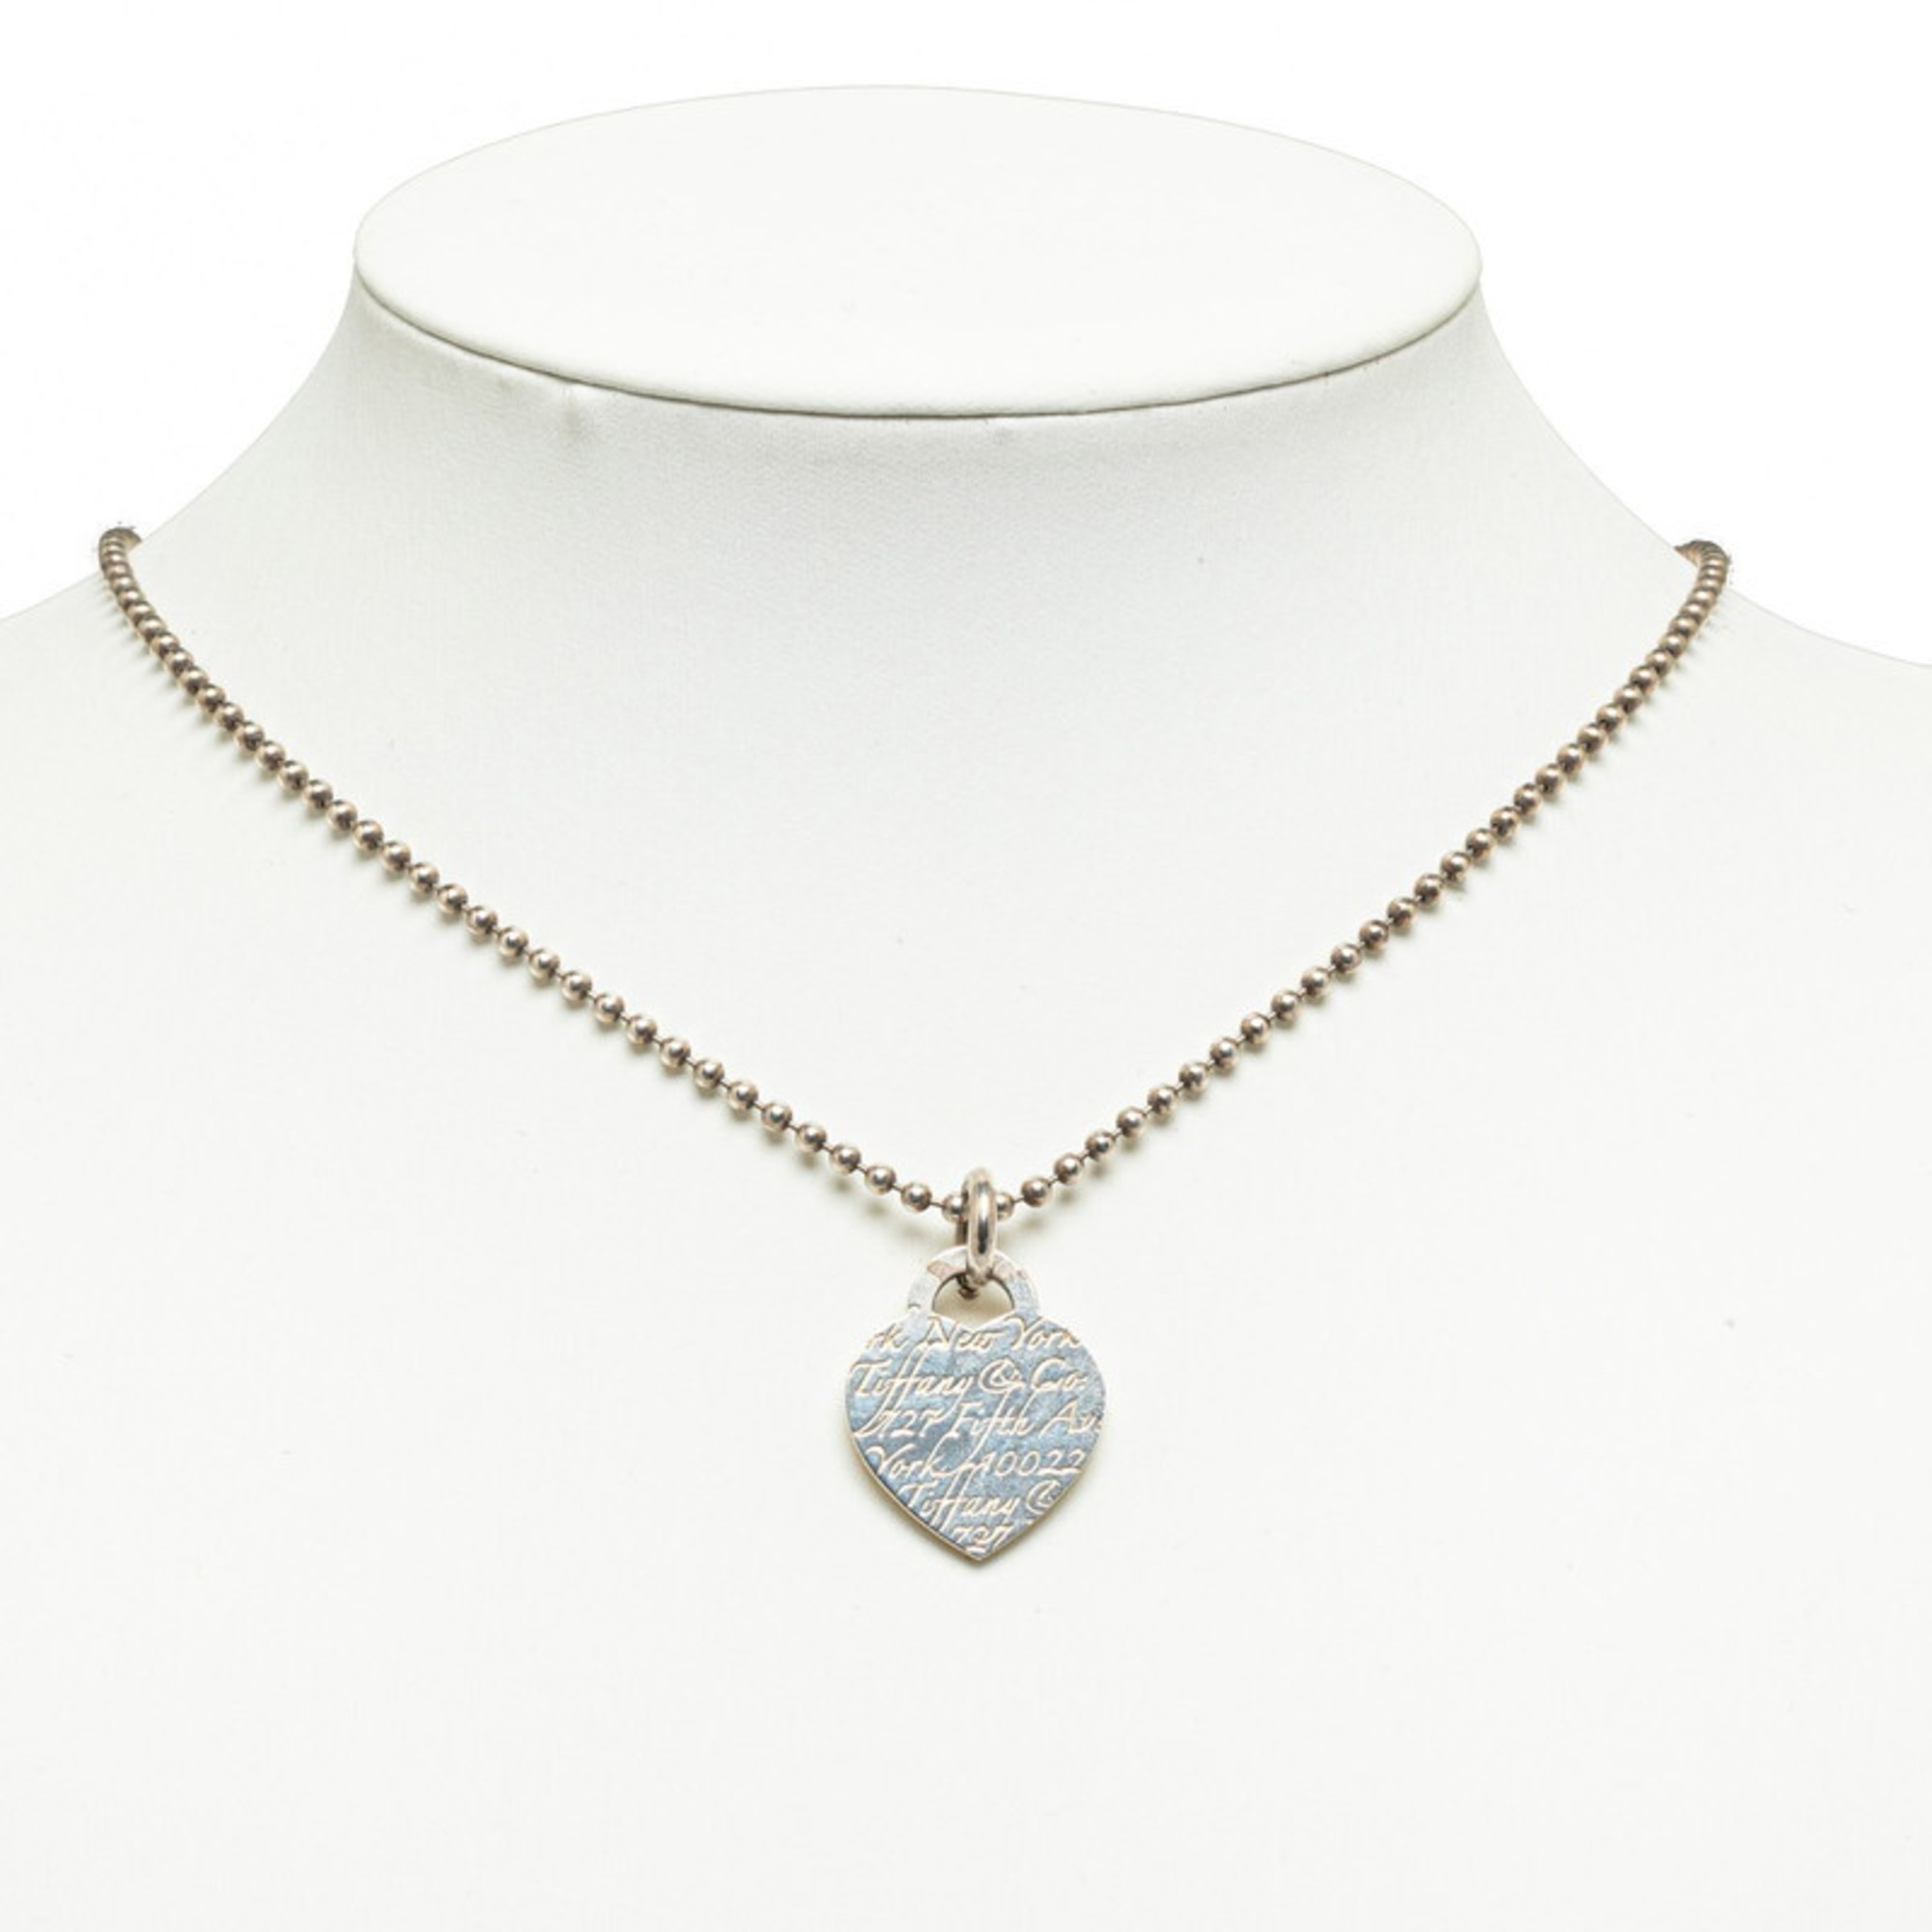 Tiffany Notes Heart Ball Chain Necklace Silver SV925 Women's TIFFANY&Co.